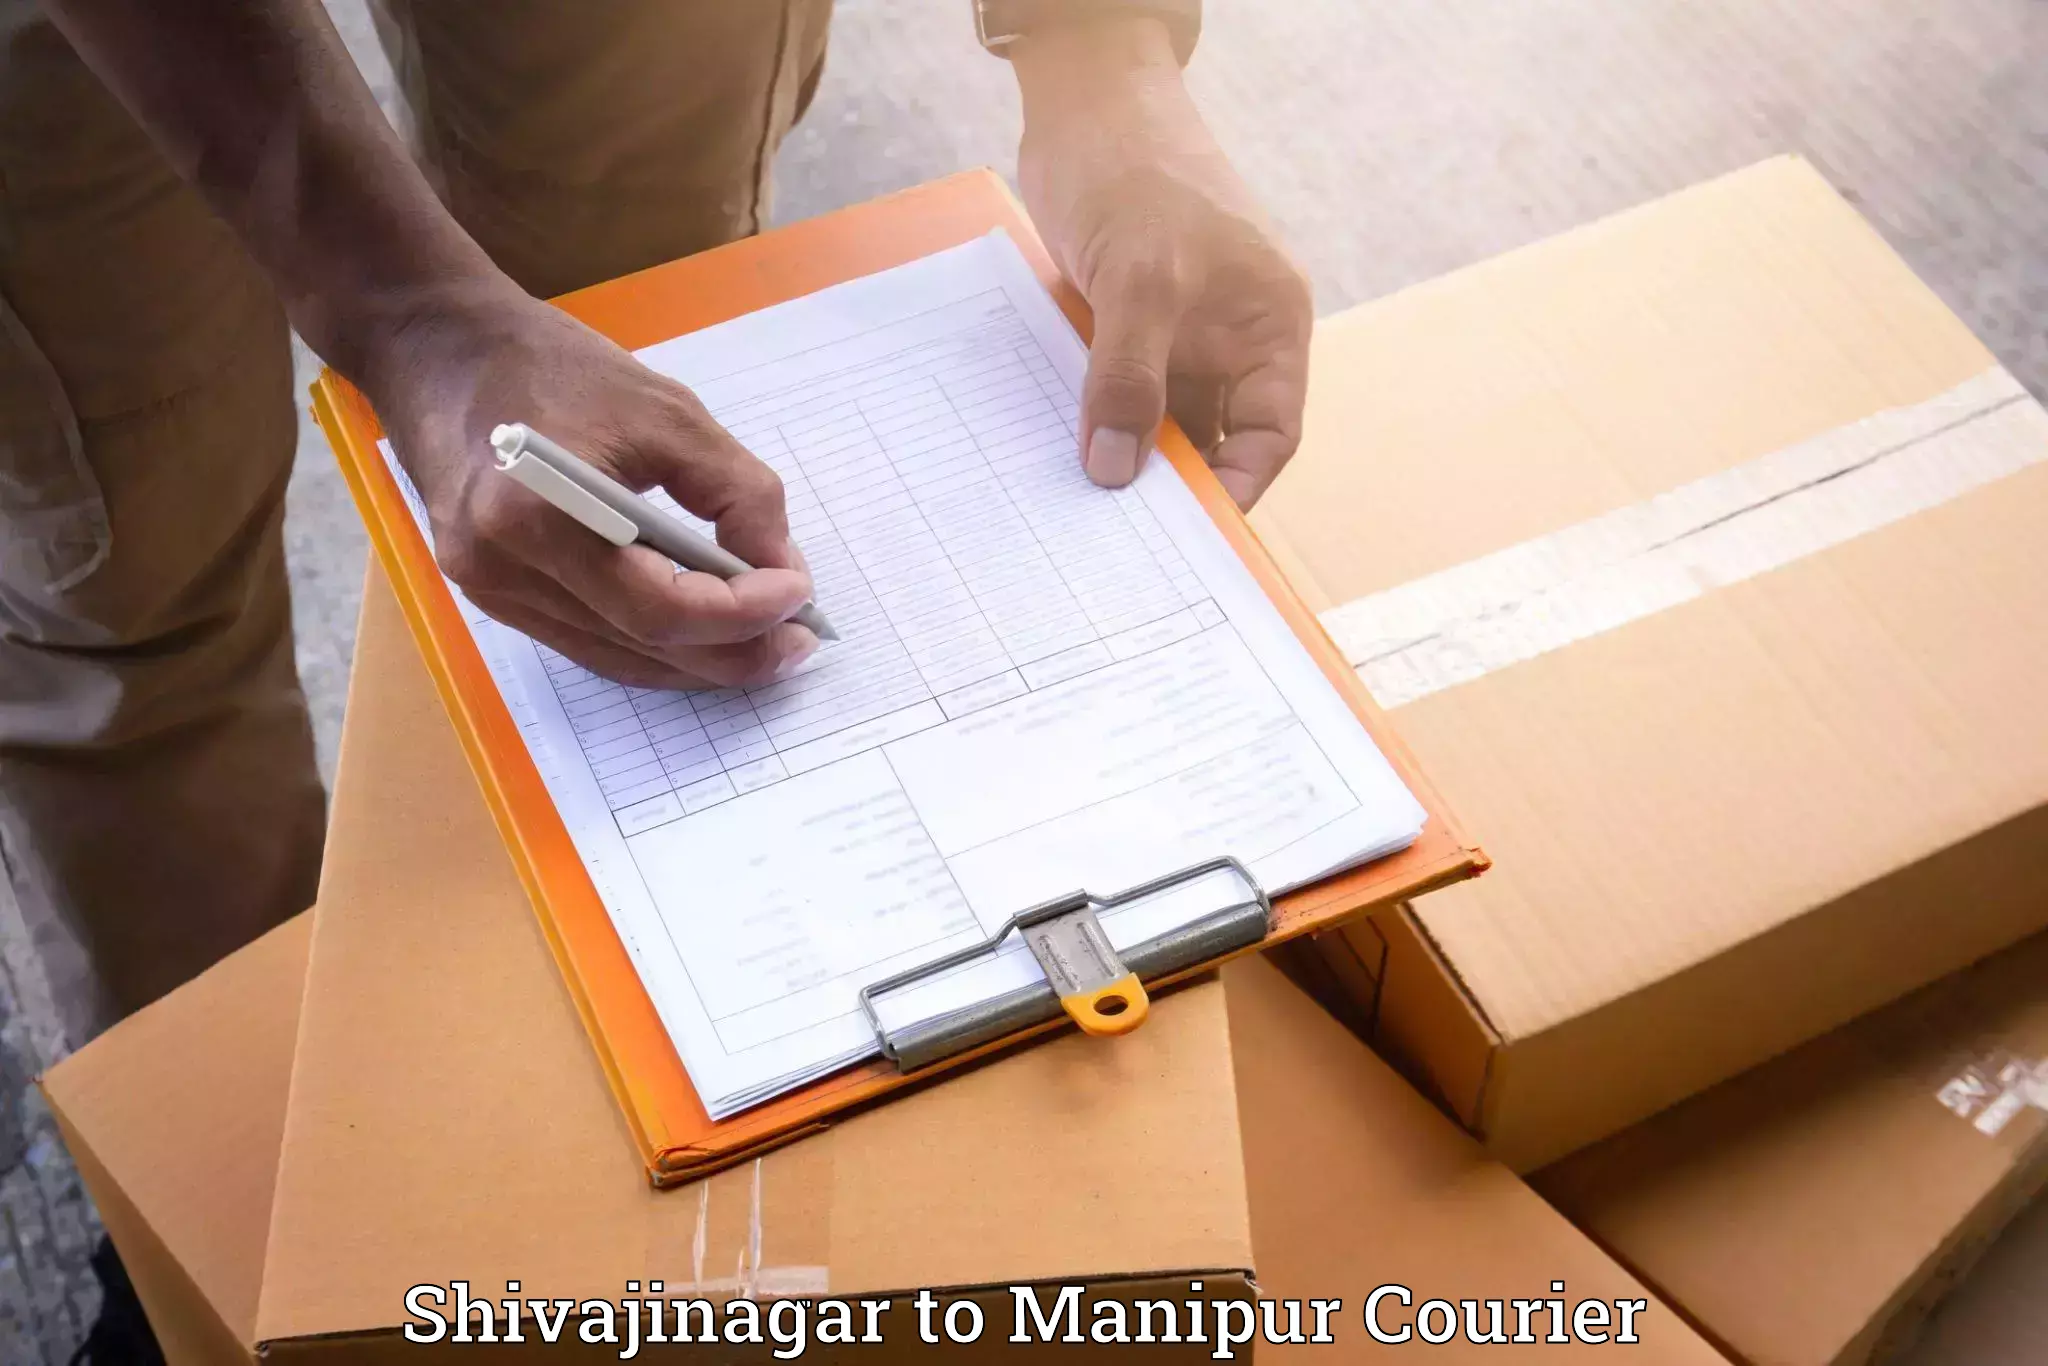 Furniture relocation experts Shivajinagar to Manipur